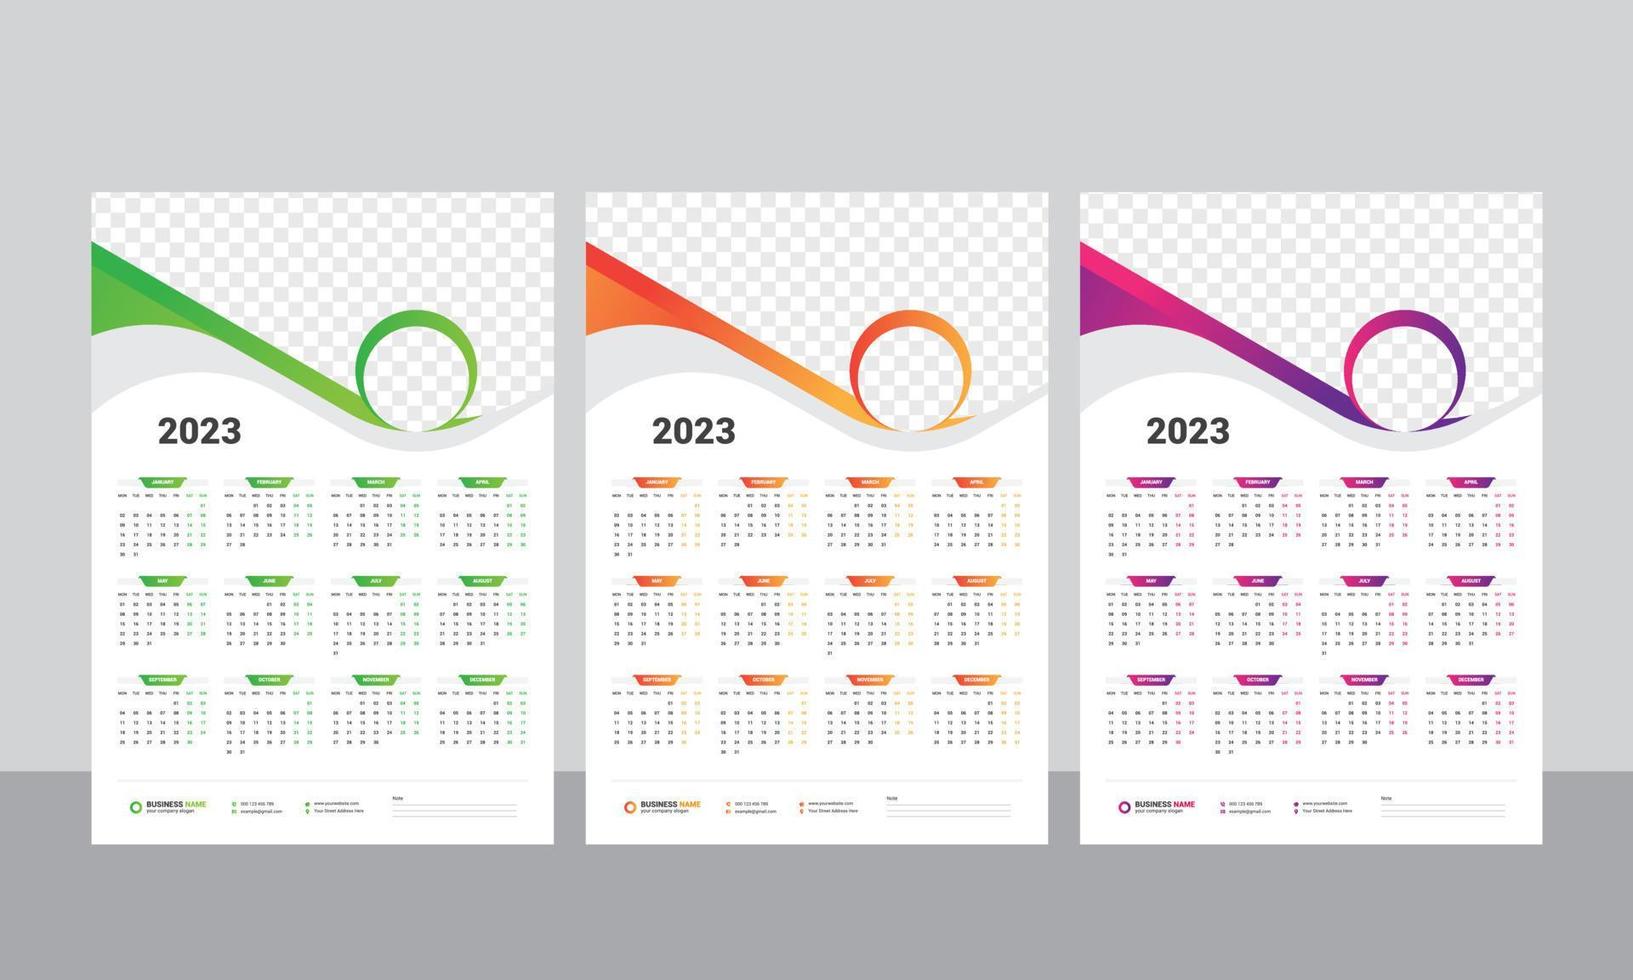 parete calendario 2023 - uno pagina calendario - singolo pagina calendario - 12 mesi calendario vettore